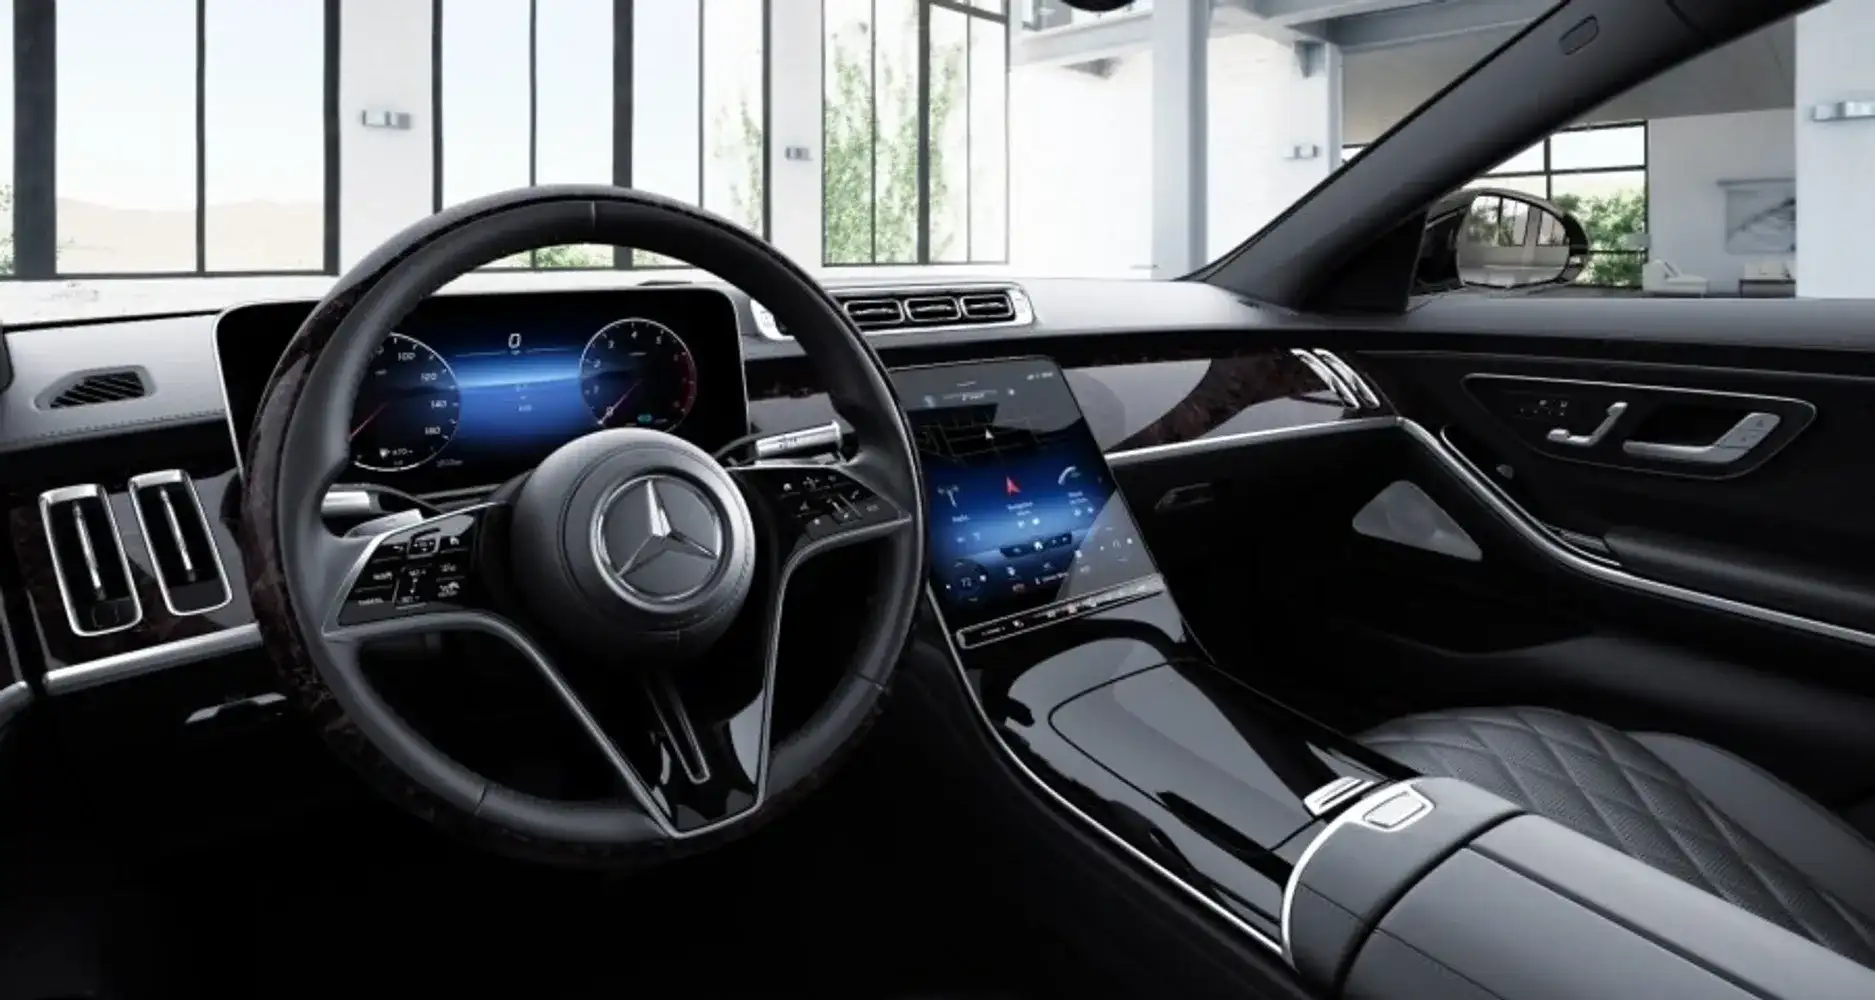 The interior space of Mercedez Luxury private car